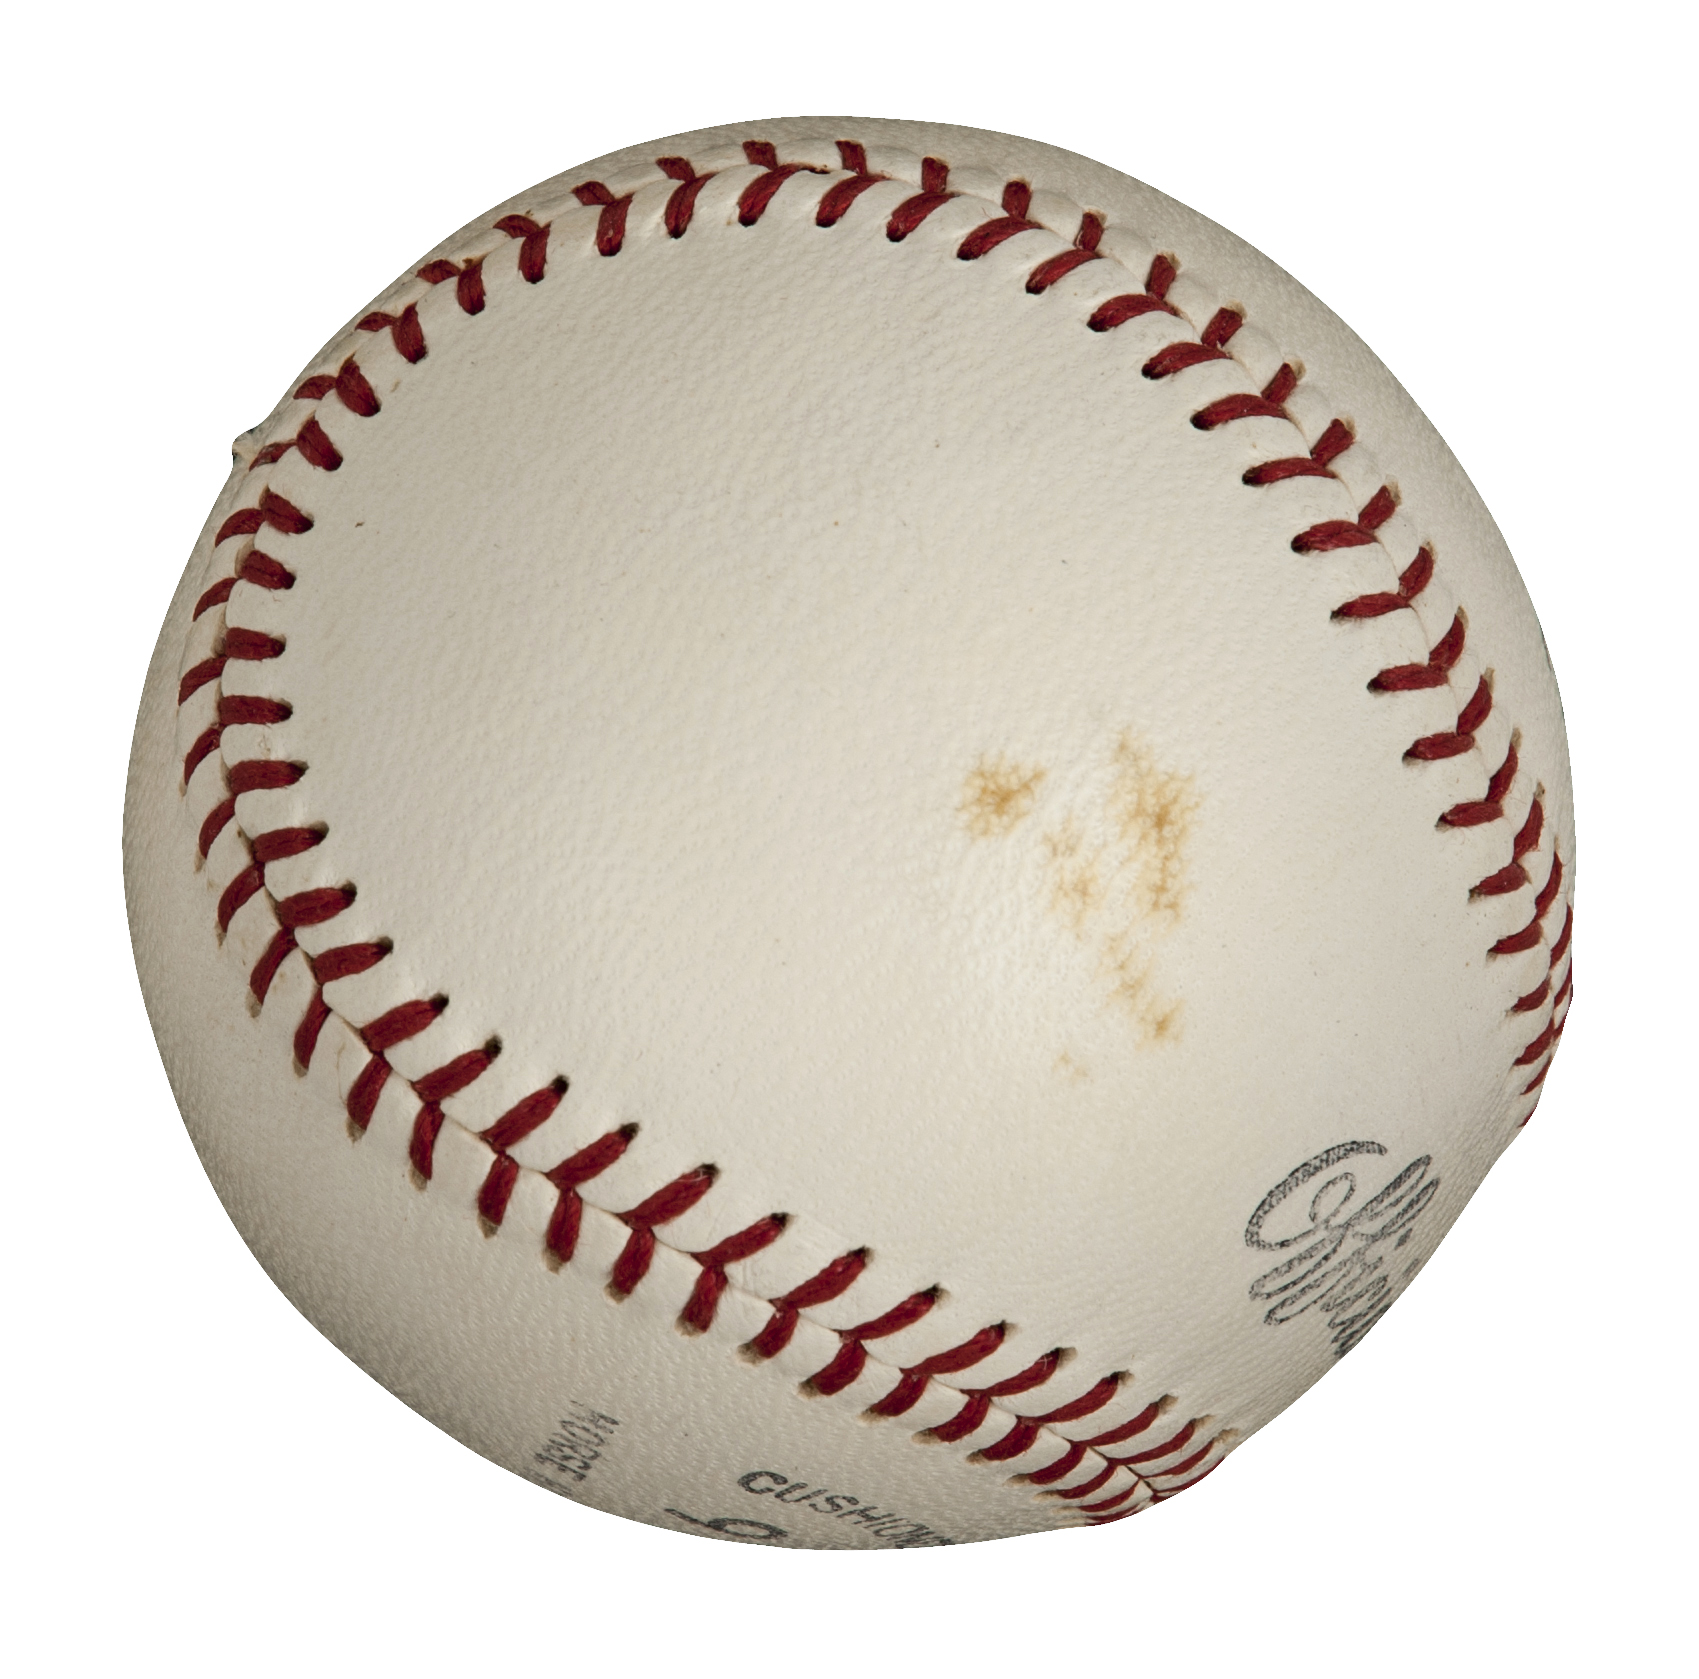 Lot Detail - Beans Reardon Single Signed Baseball (PSA/DNA)